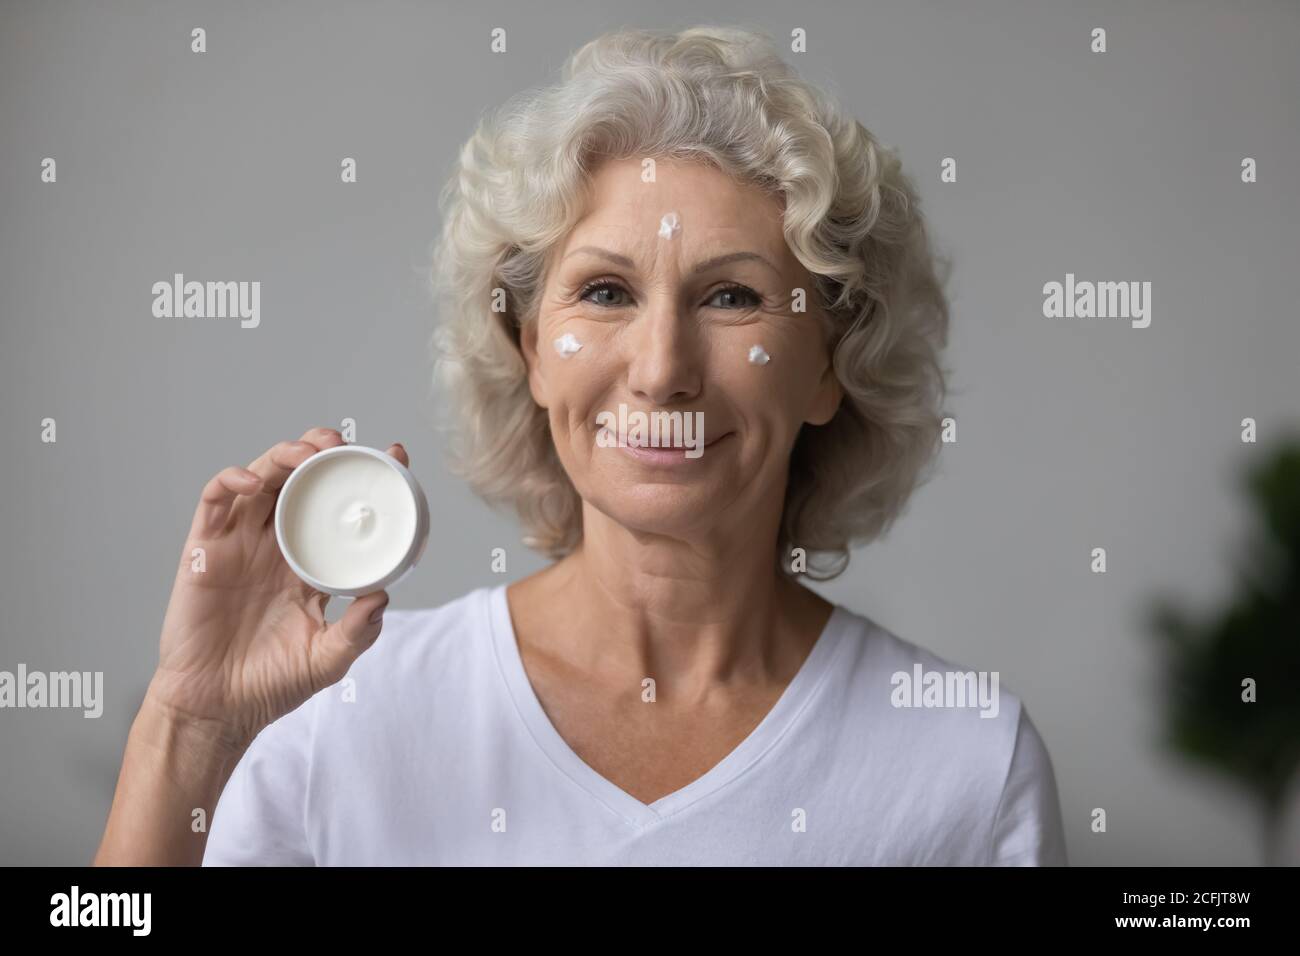 Head shot portrait satisfied mature woman holding moisturizing cream jar Stock Photo